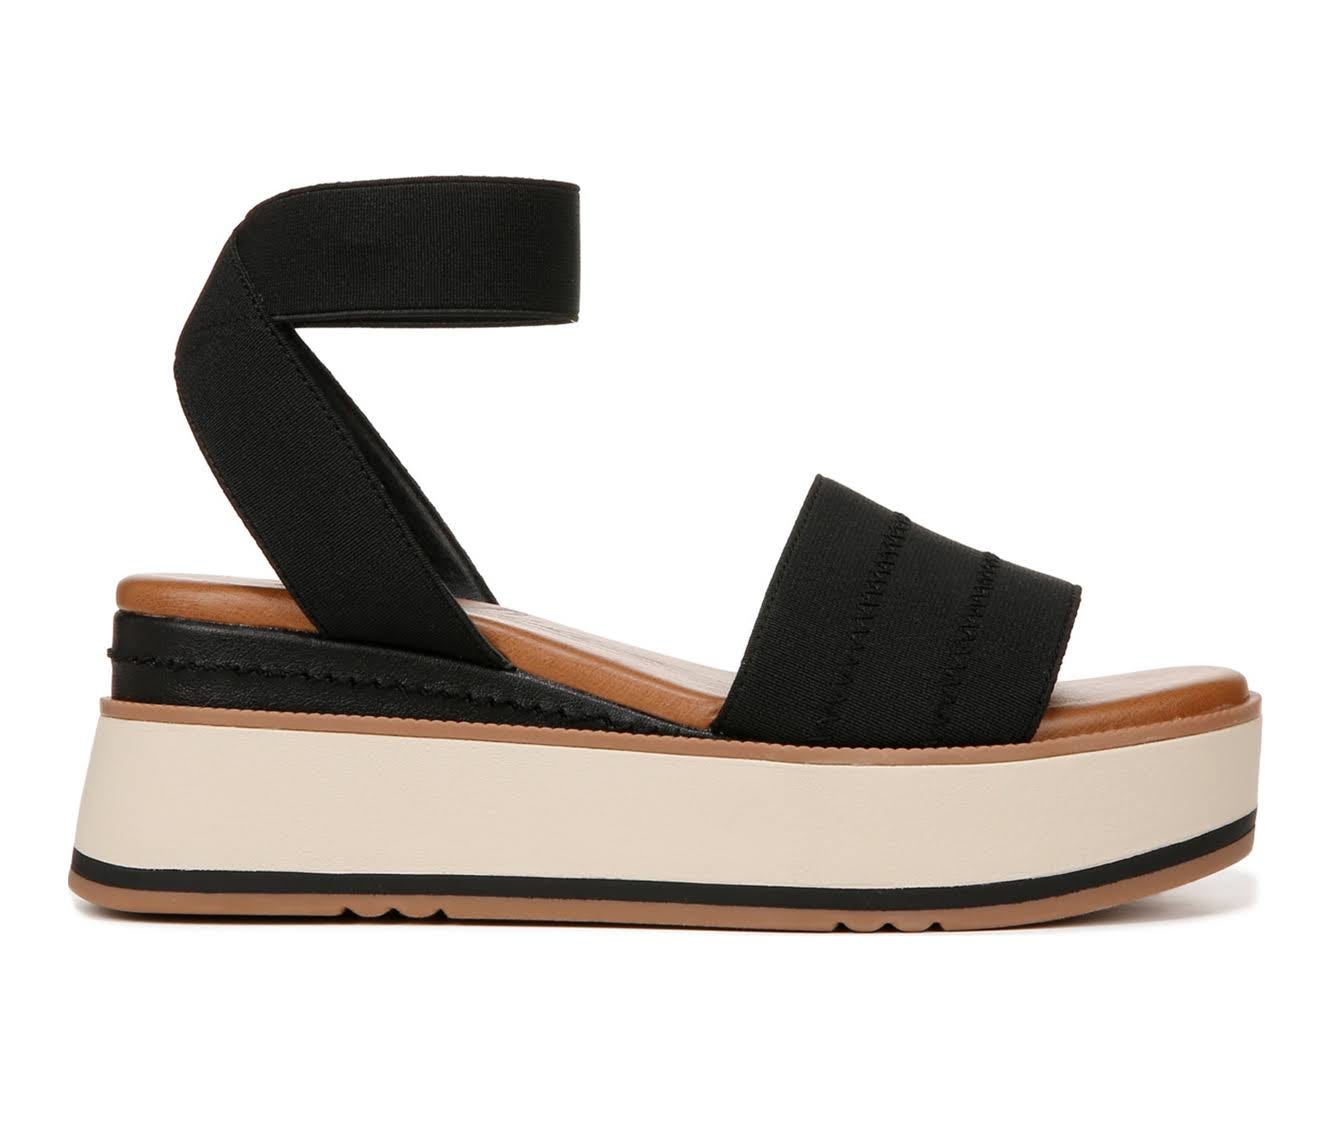 Comfortable Platform Sandals for Spring: Zodiac Women's Bailee Platform Wedge | Image